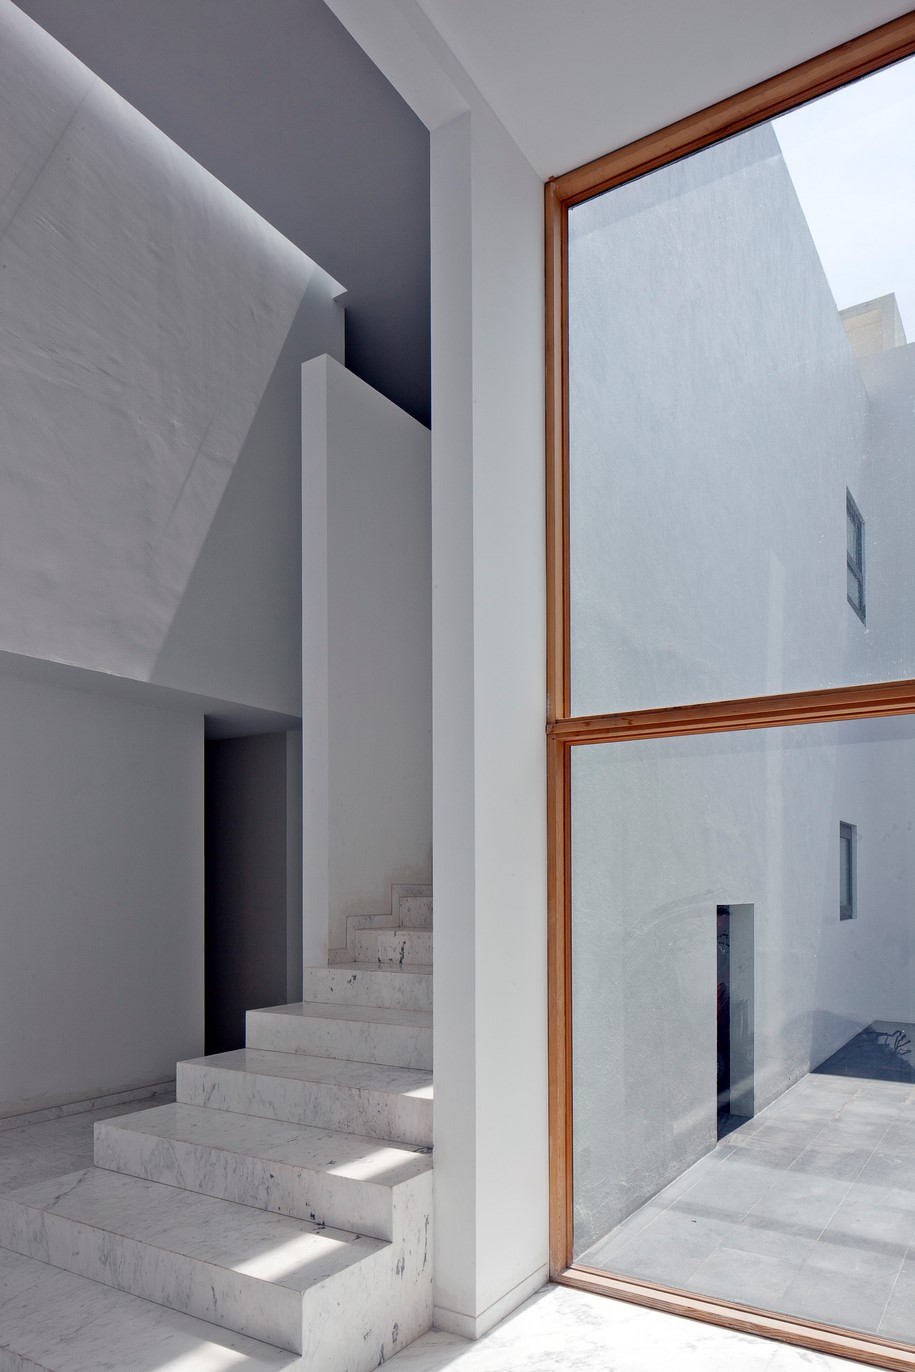 LUCIO MUNIAIN et al, casa ar, ar house, residential, concrete, 2011